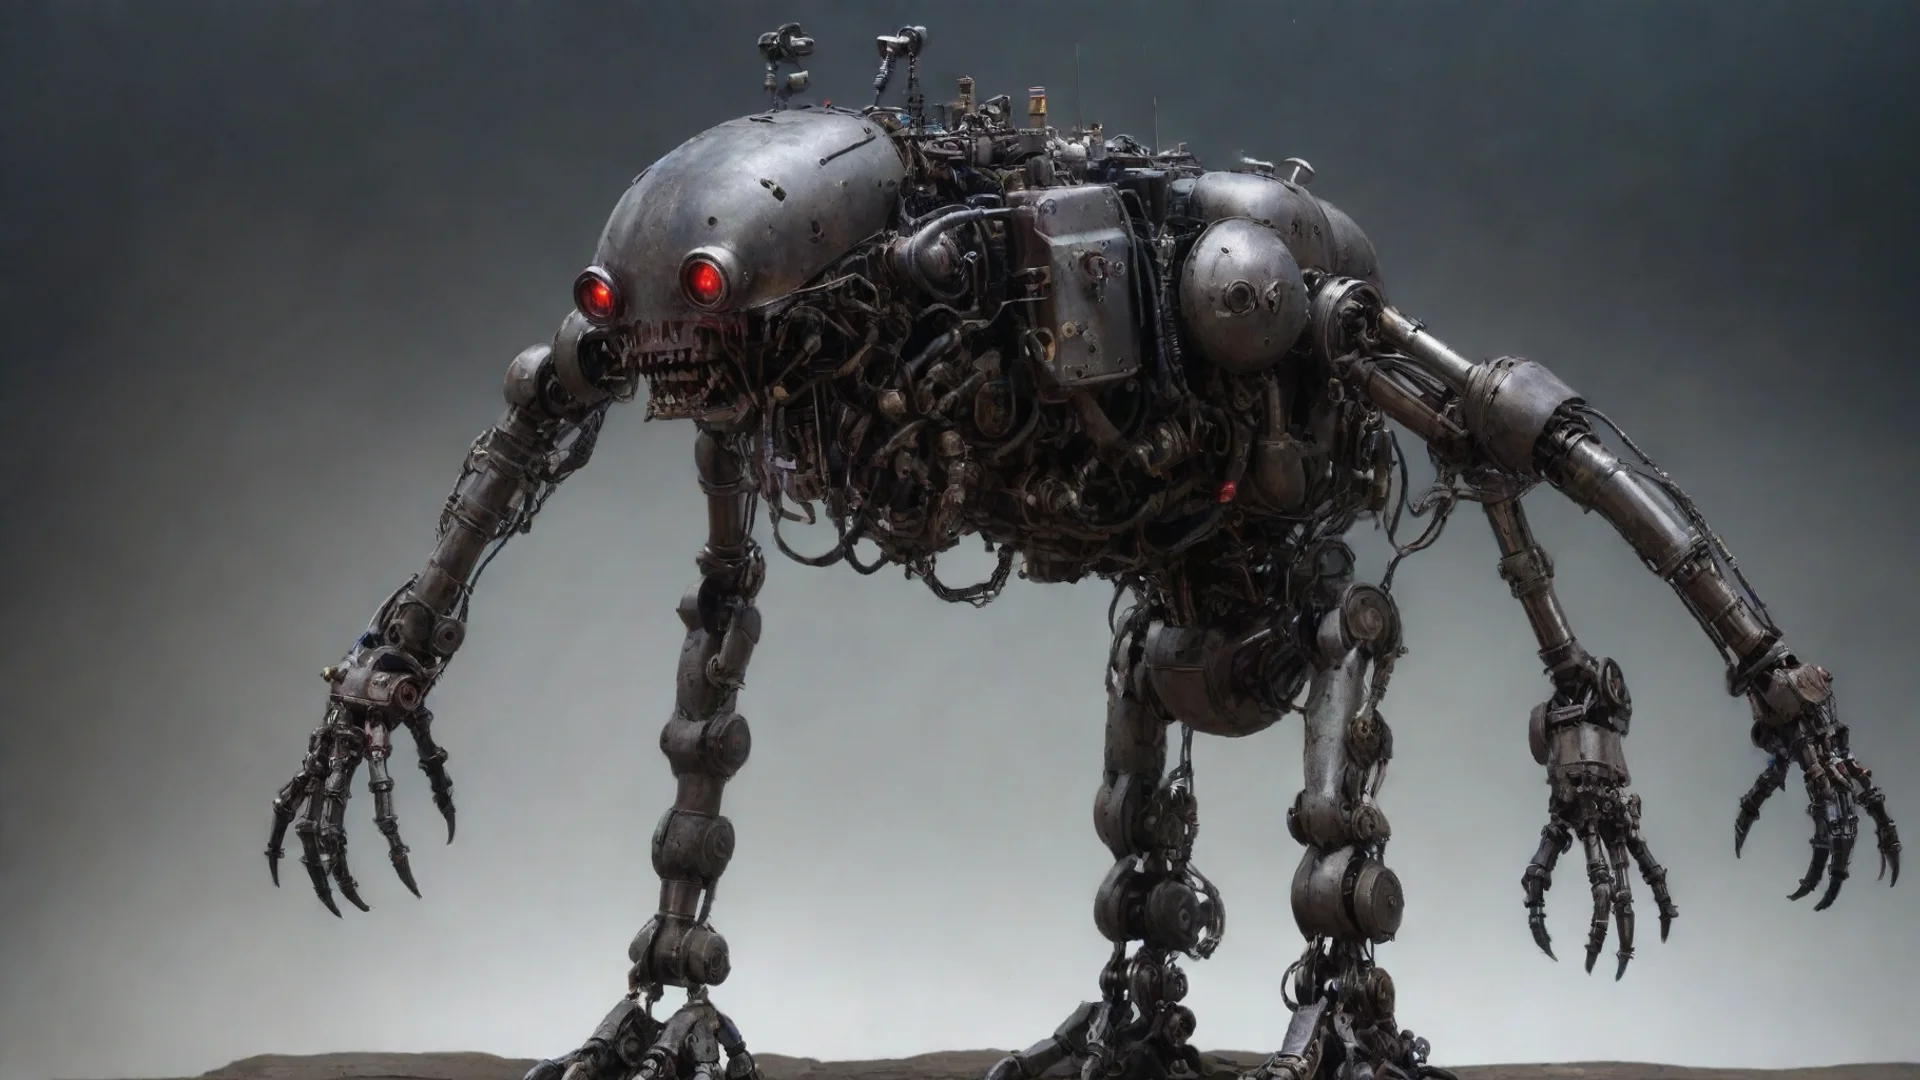 amazing grimdark aetherophasic engine powered evil robot awesome portrait 2 wide